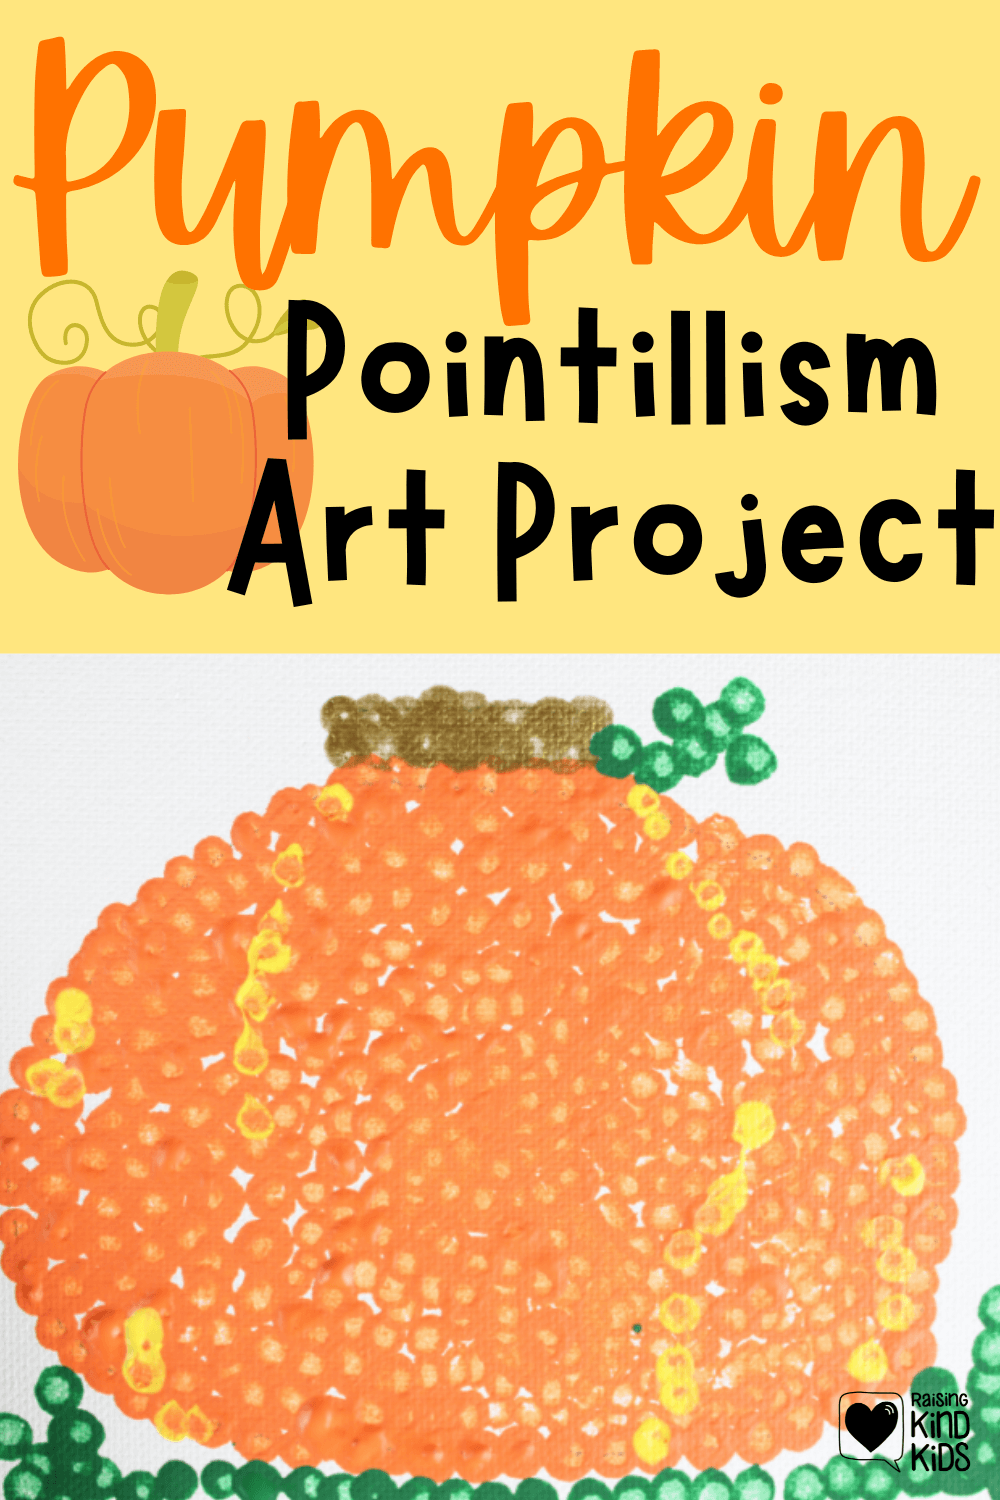 Pumpkin pointillism art project perfect for fall